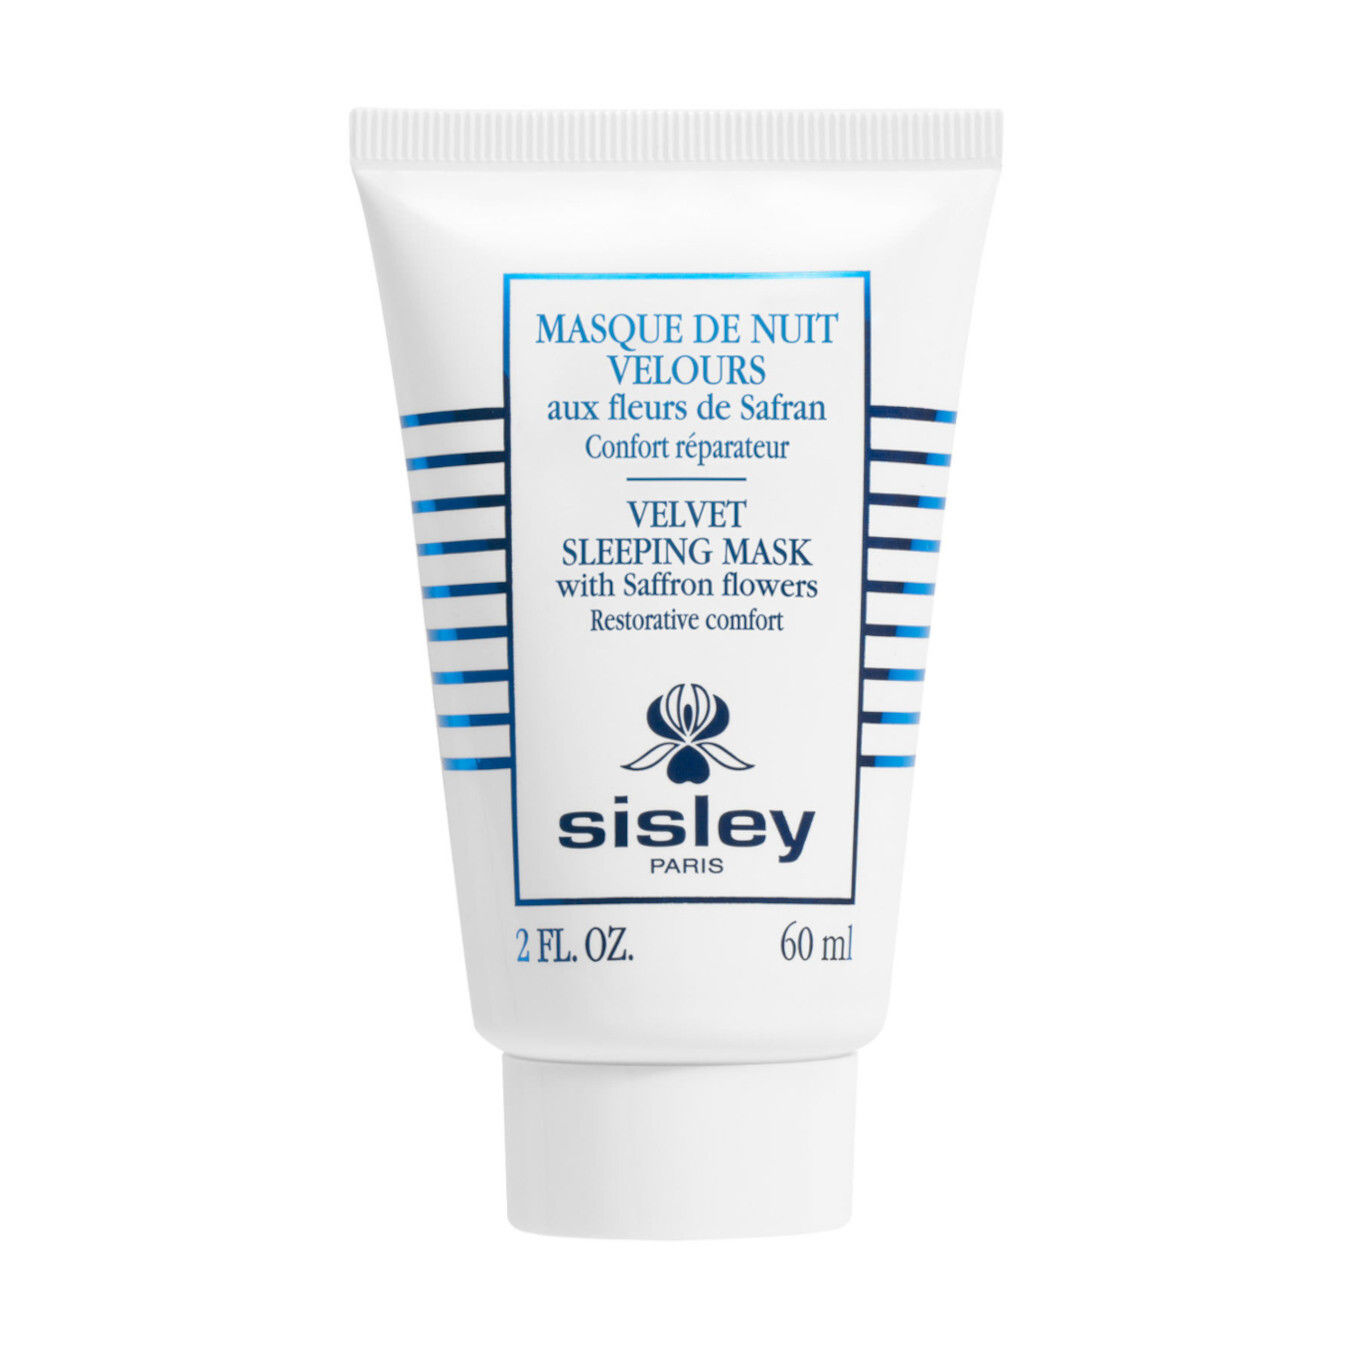 Sisley Masque de Nuit Velours Restorative comfort von Sisley